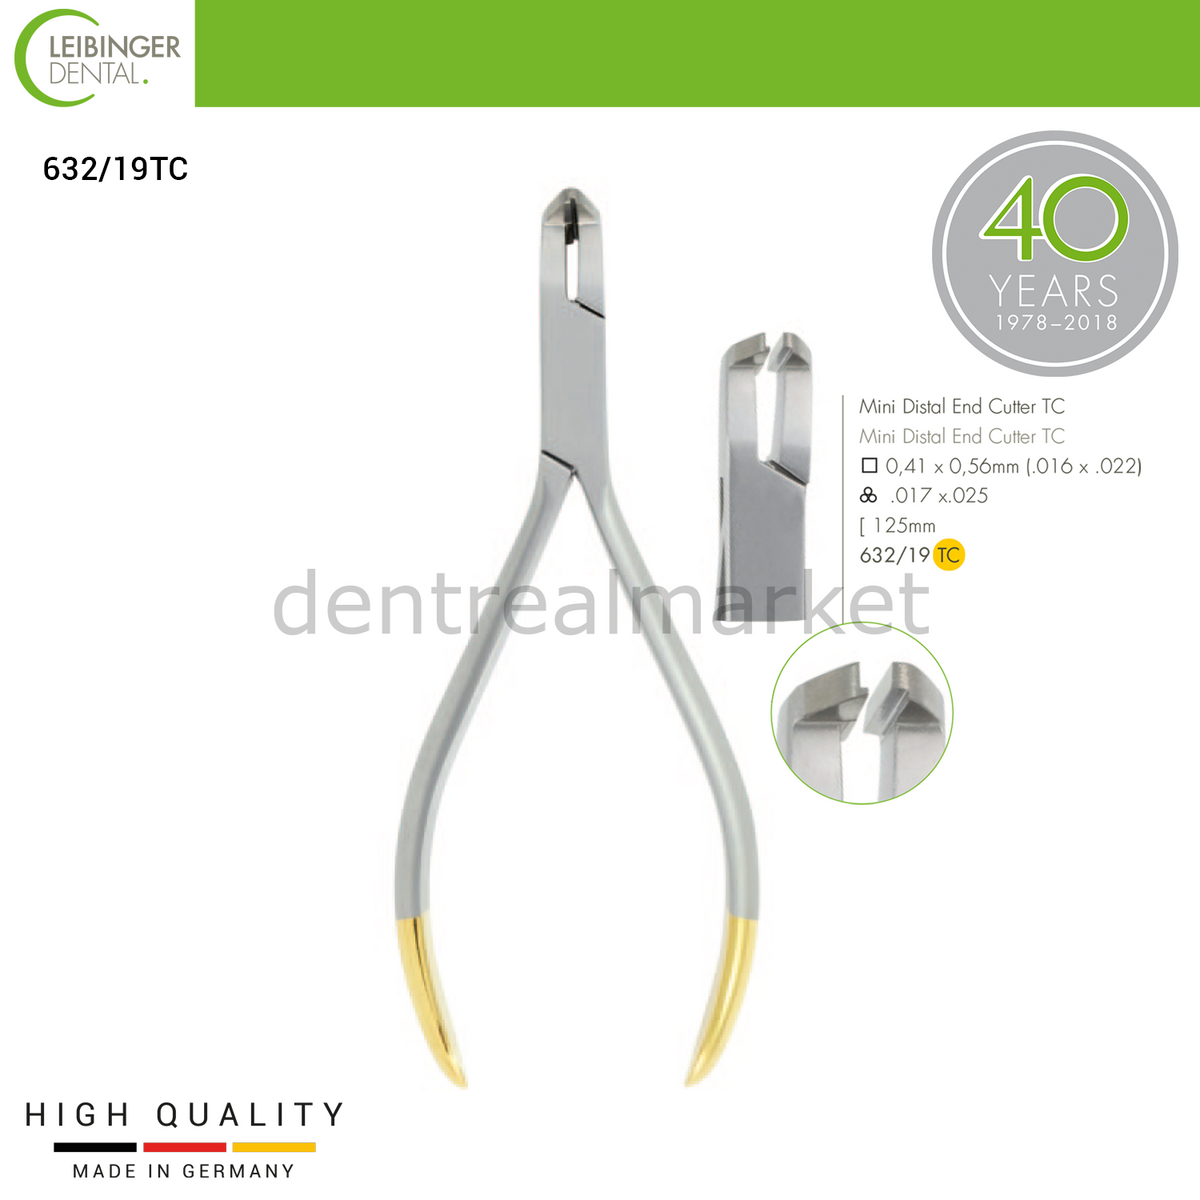 DentrealStore - Leibinger Mini Distal End Cutter Tc - Mini Distal End Cutter - 125 mm